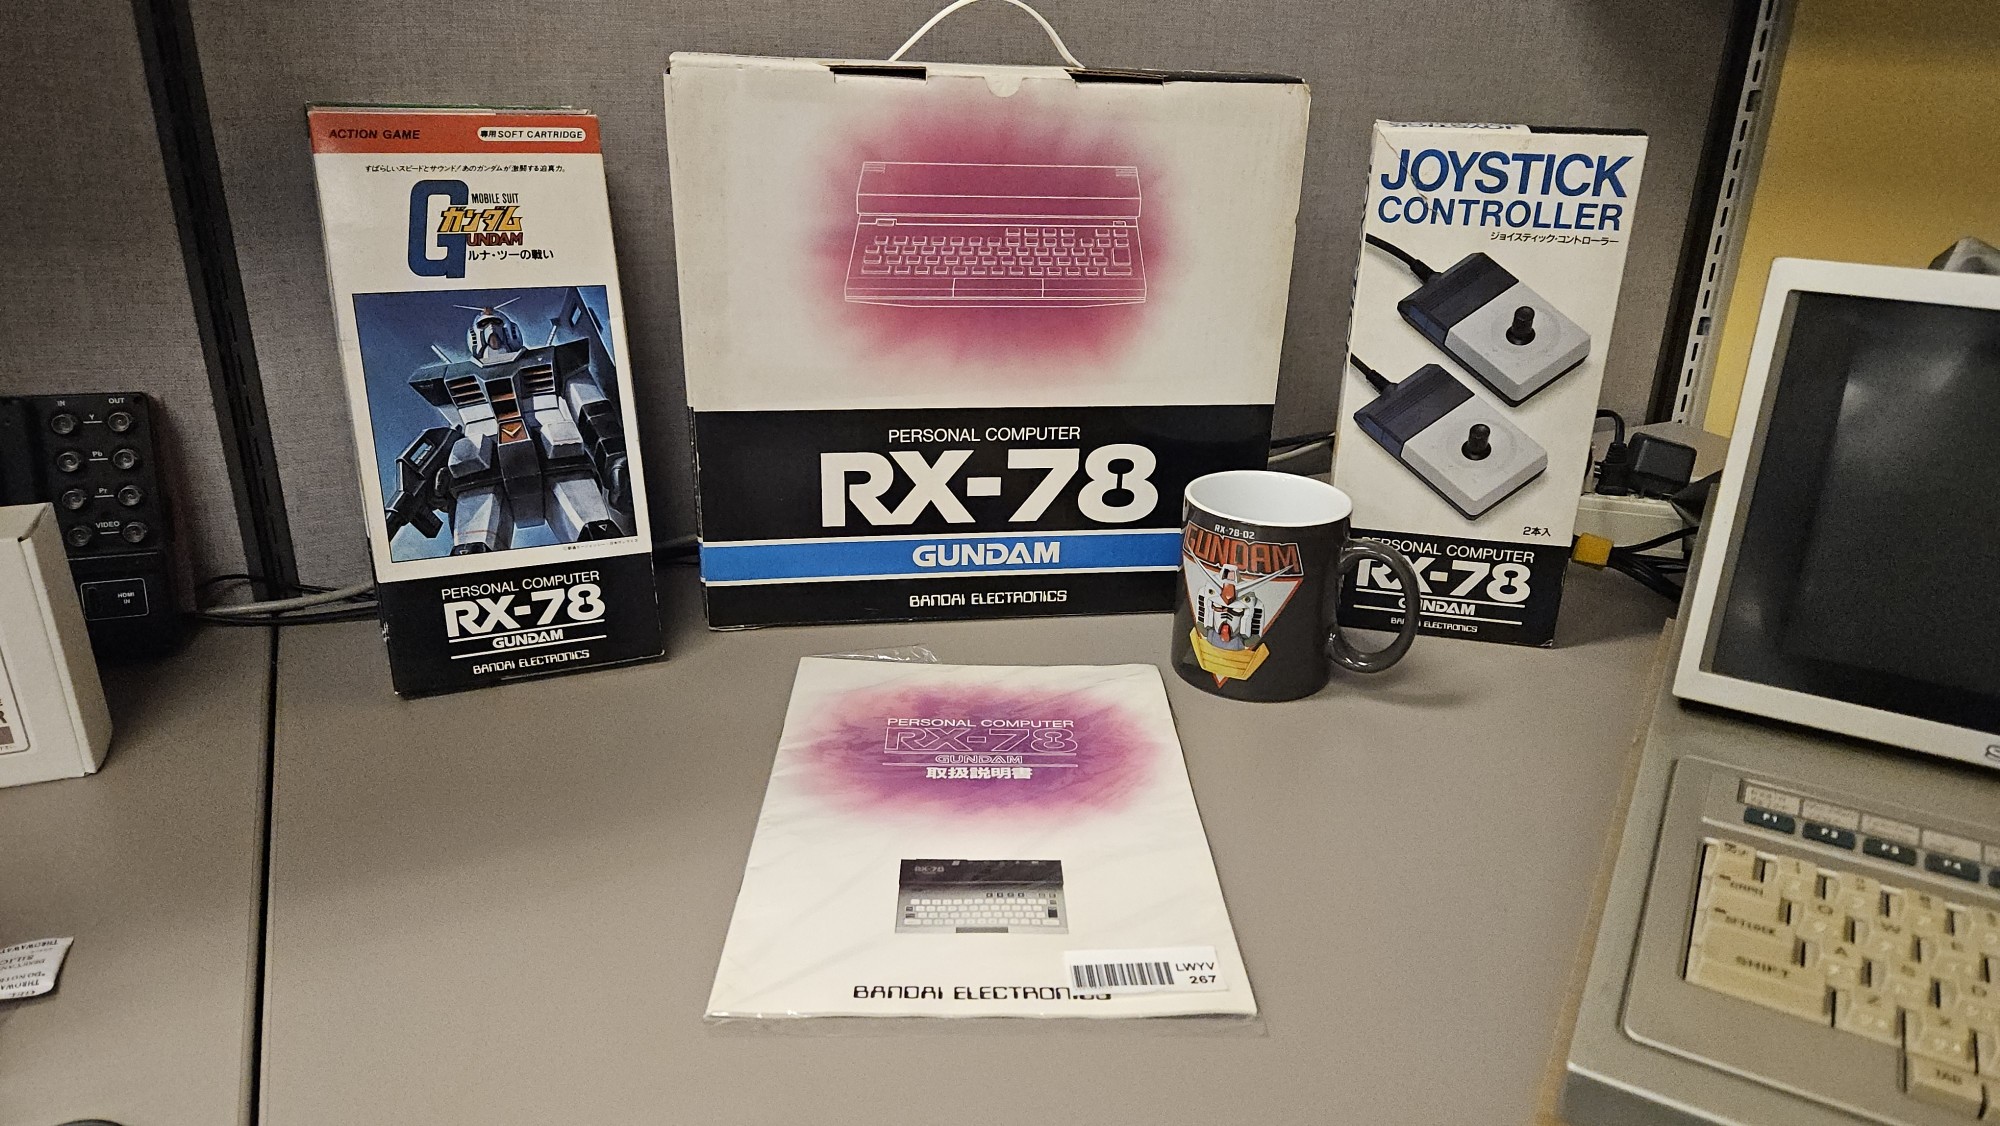 Box, manual, joysticks, and game for the Bandai RX-78 personal computer. Bonus Gundam mug as well.